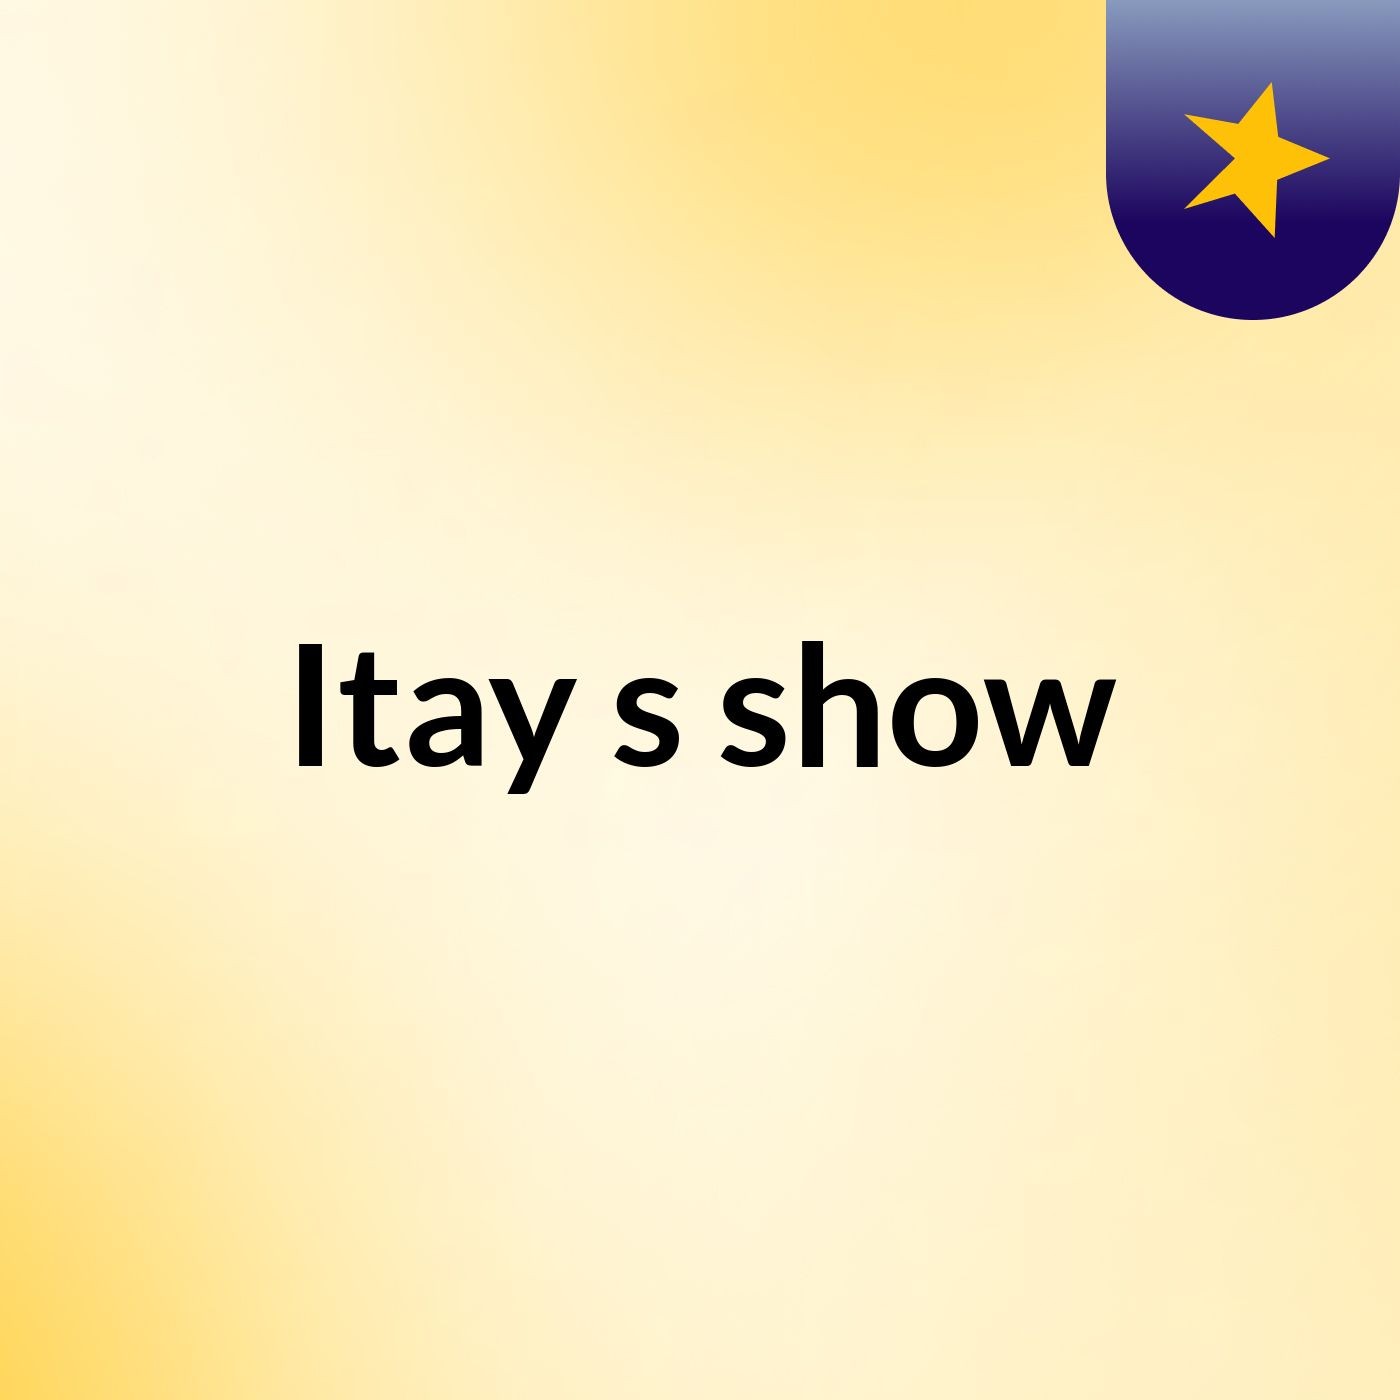 Itay's show